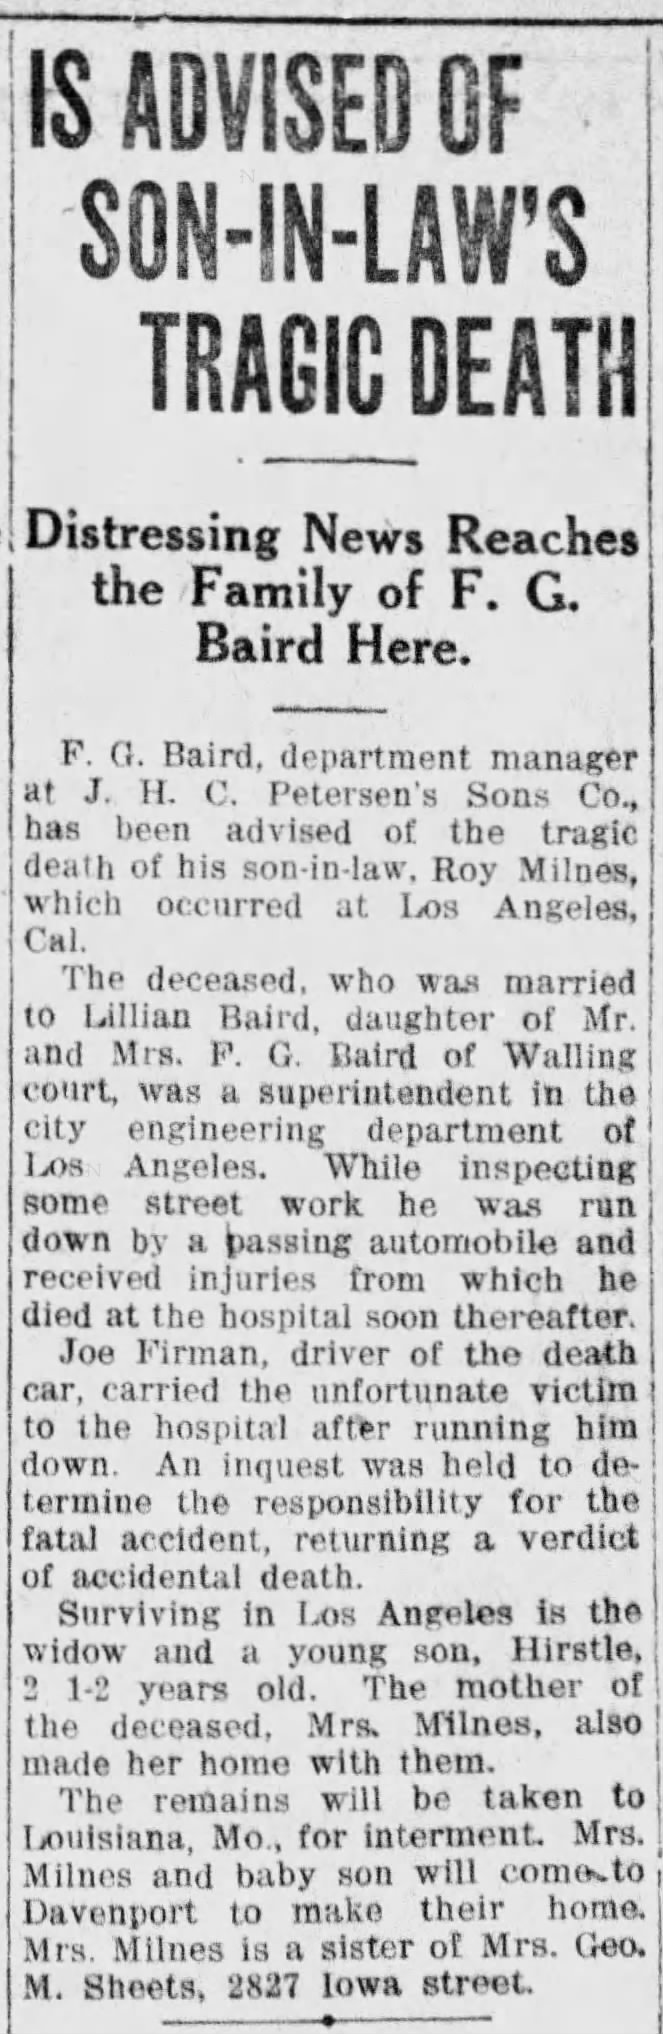 Newspaper report of Mr. Baird son-in-law Roy Milnes death